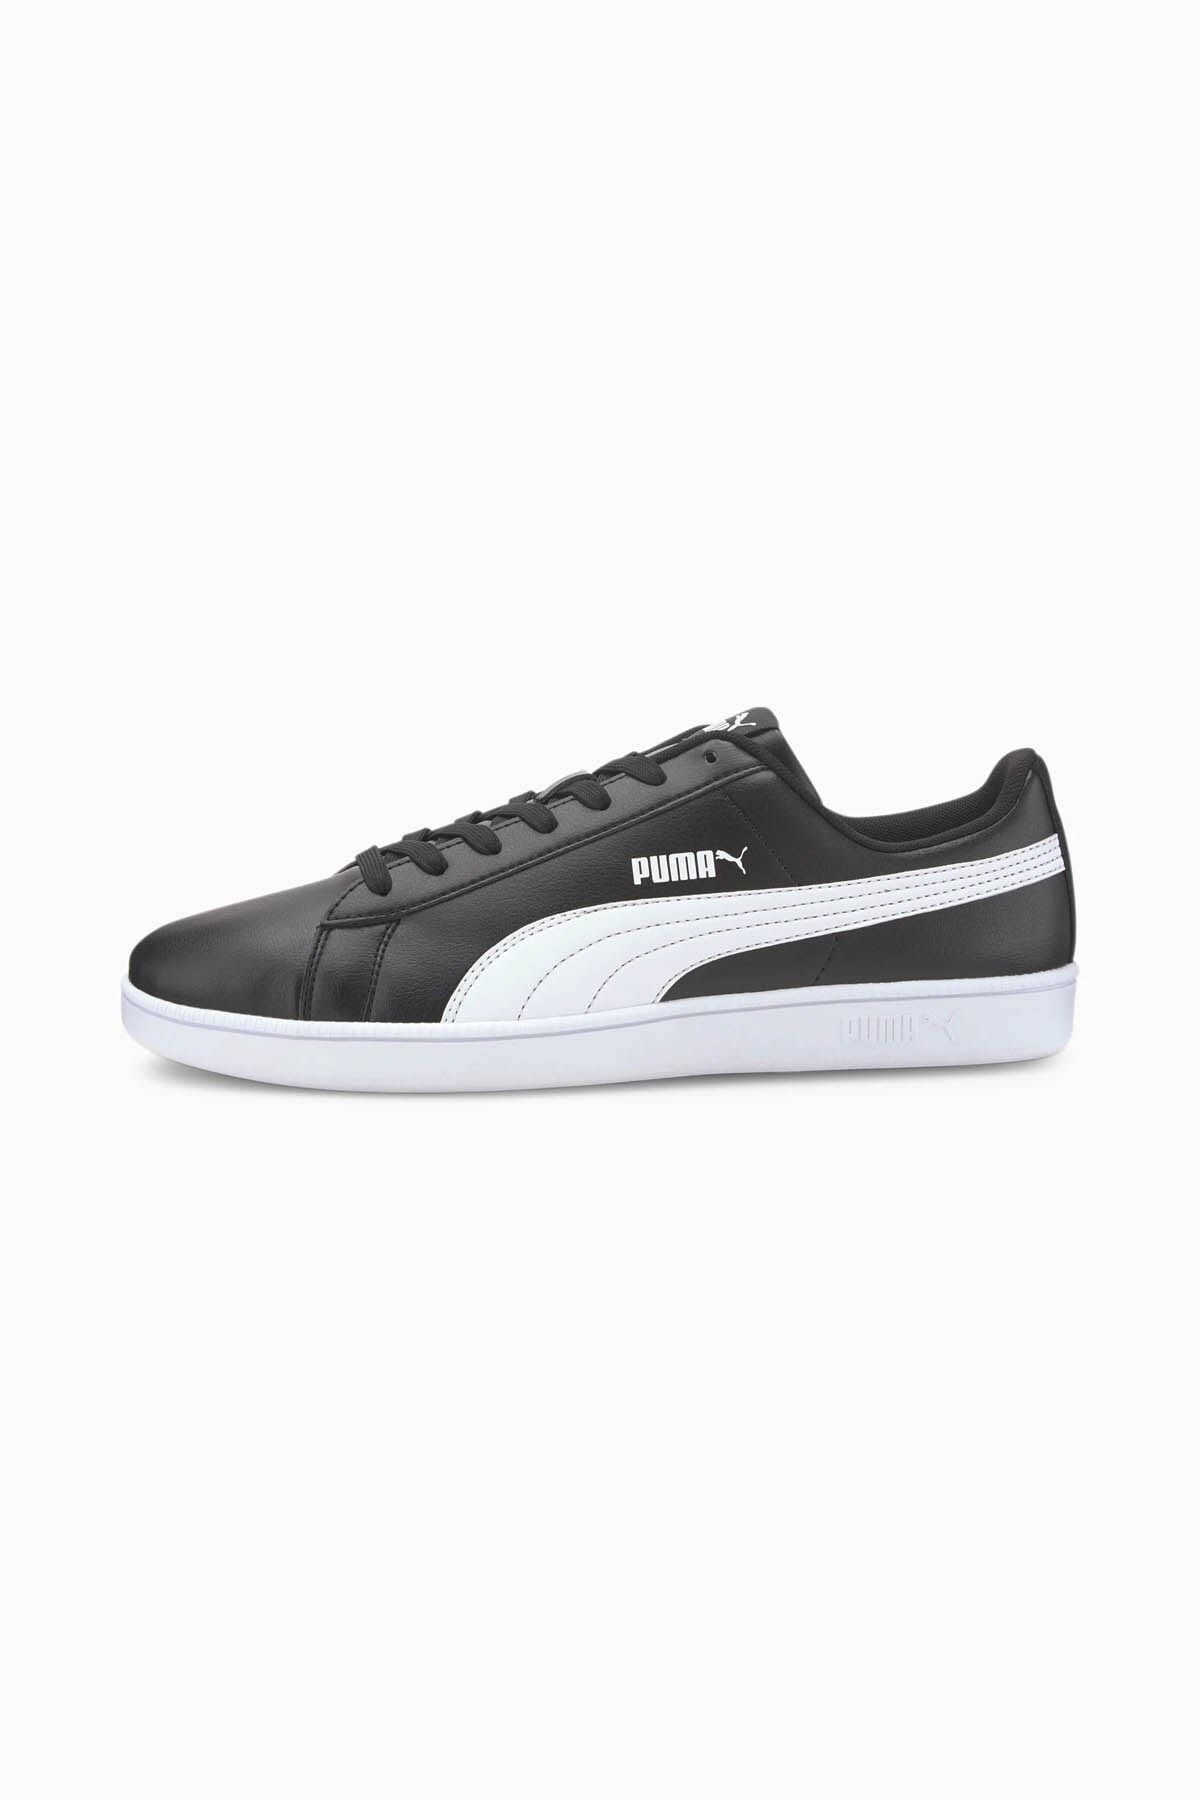 Puma Unisex Sneaker Siyah Beyaz 372605-01